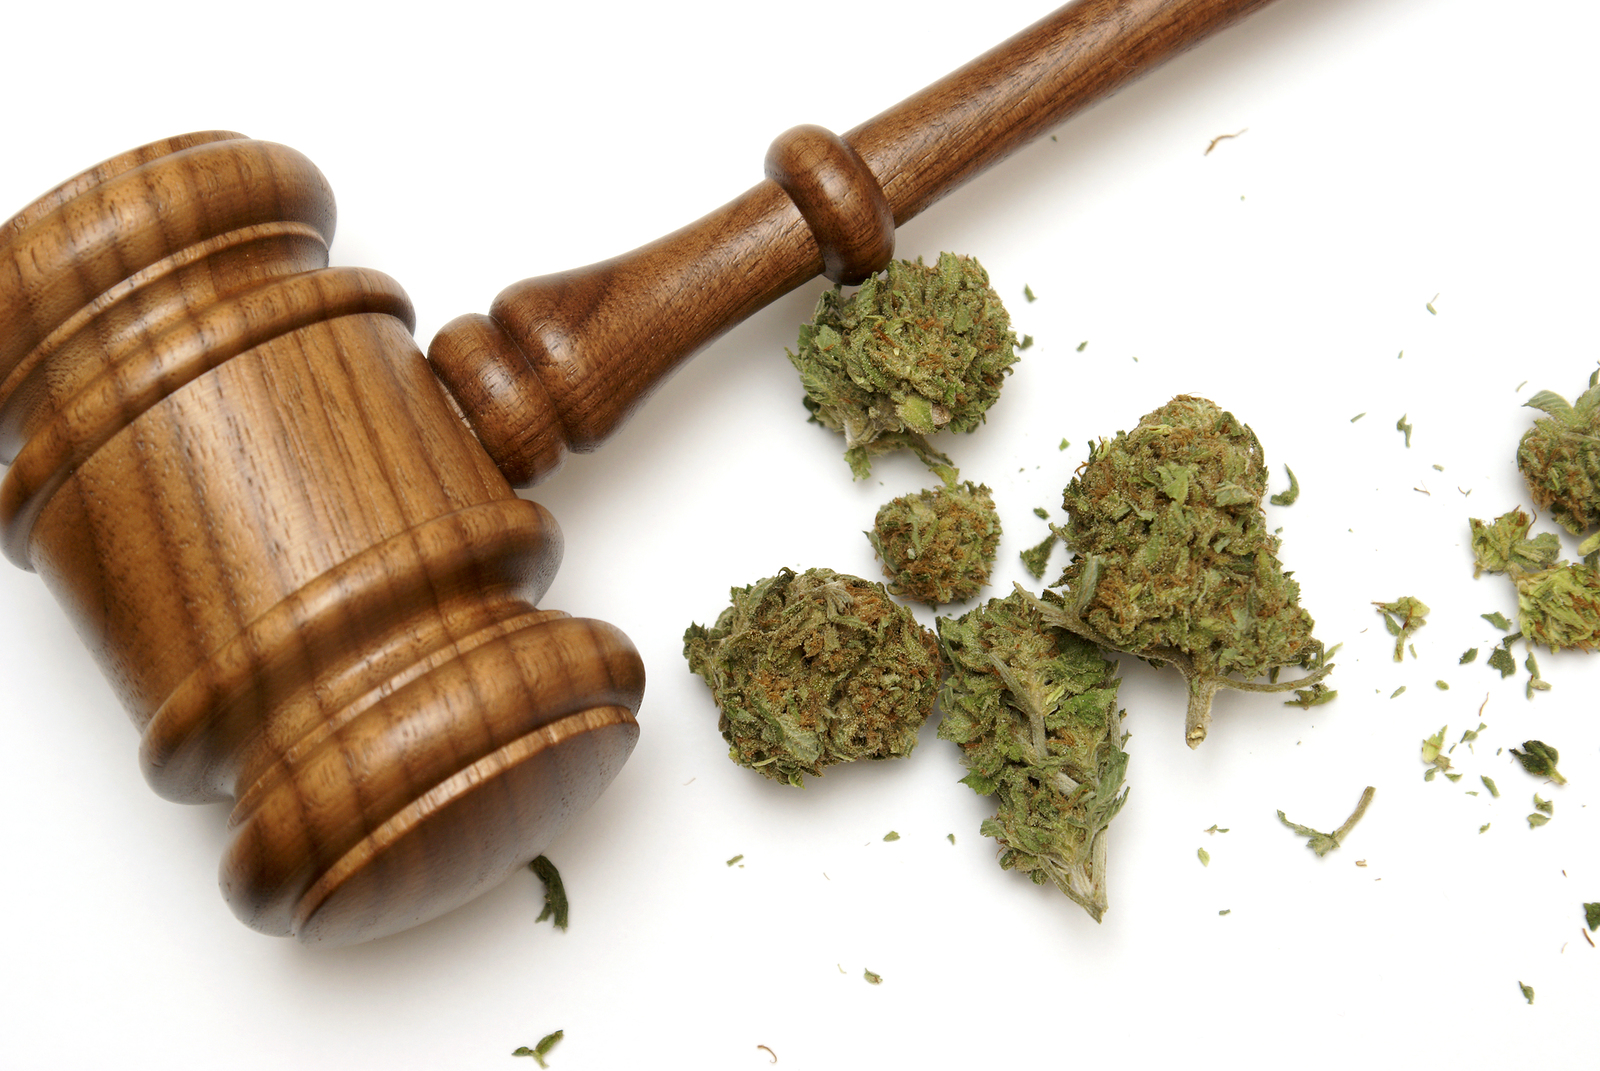 Utah marijuana laws